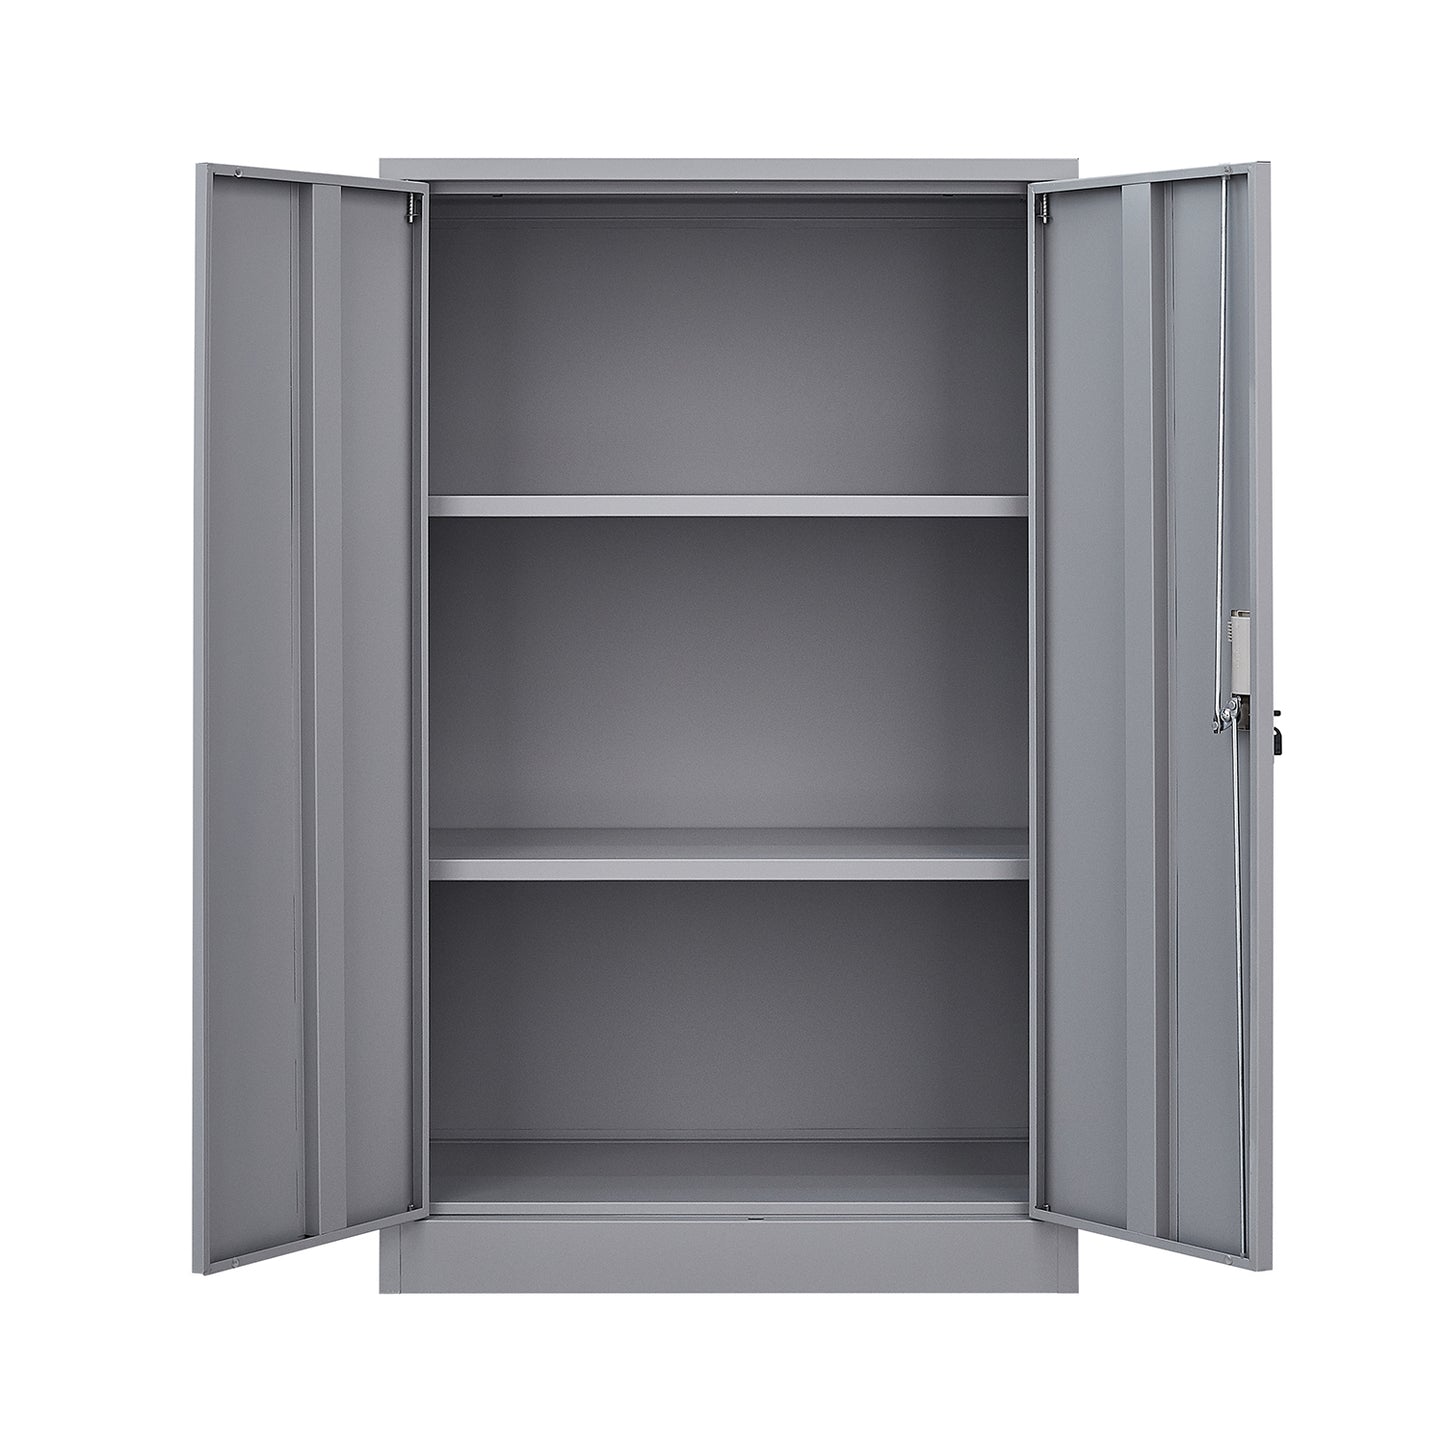 Metal Storage Cabinet with Locking Doors and Adjustable Shelf, Folding Filing Storage Cabinet with Wheels, Rolling Storage Locker Cabinet for Home Office,School,Garage,Gray